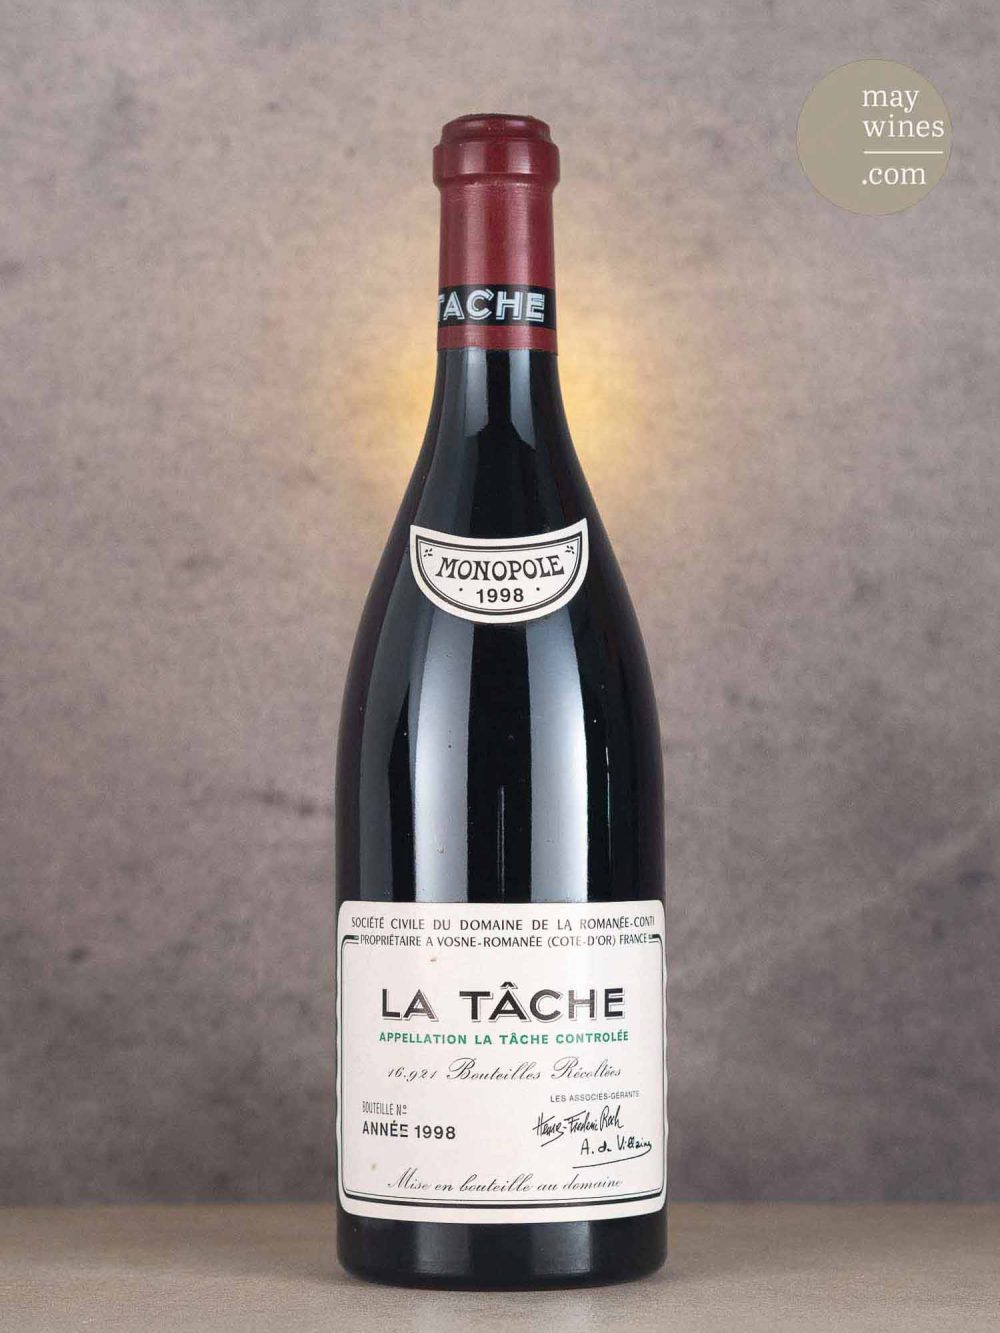 May Wines – Rotwein – 1998 La Tâche Grand Cru Monopole - Domaine de la Romanée-Conti